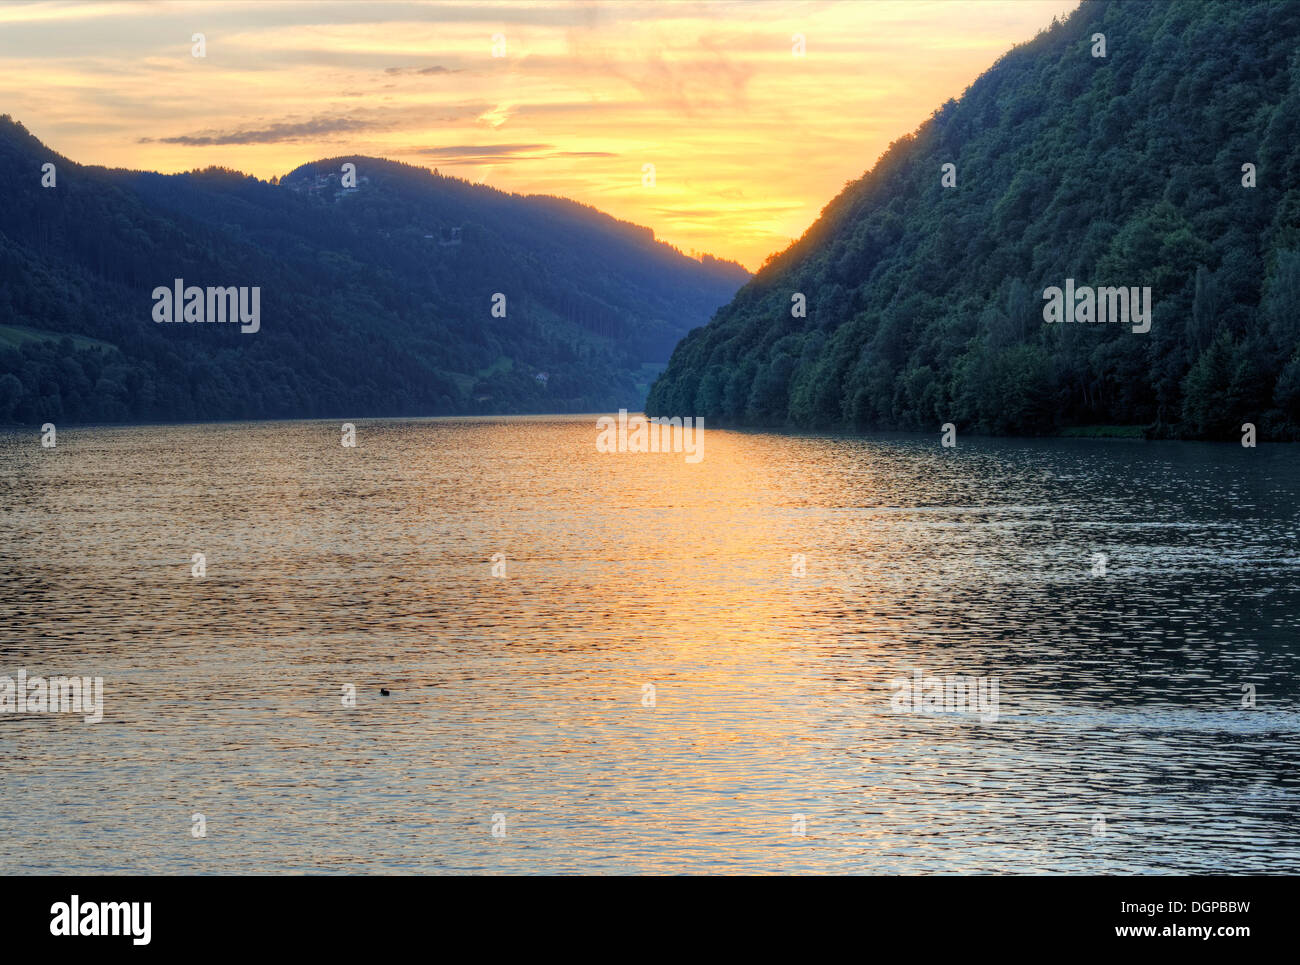 Evening on the Danube, Schloegen Loop, Hausruckviertel region, Upper Austria, Austria, Europe Stock Photo